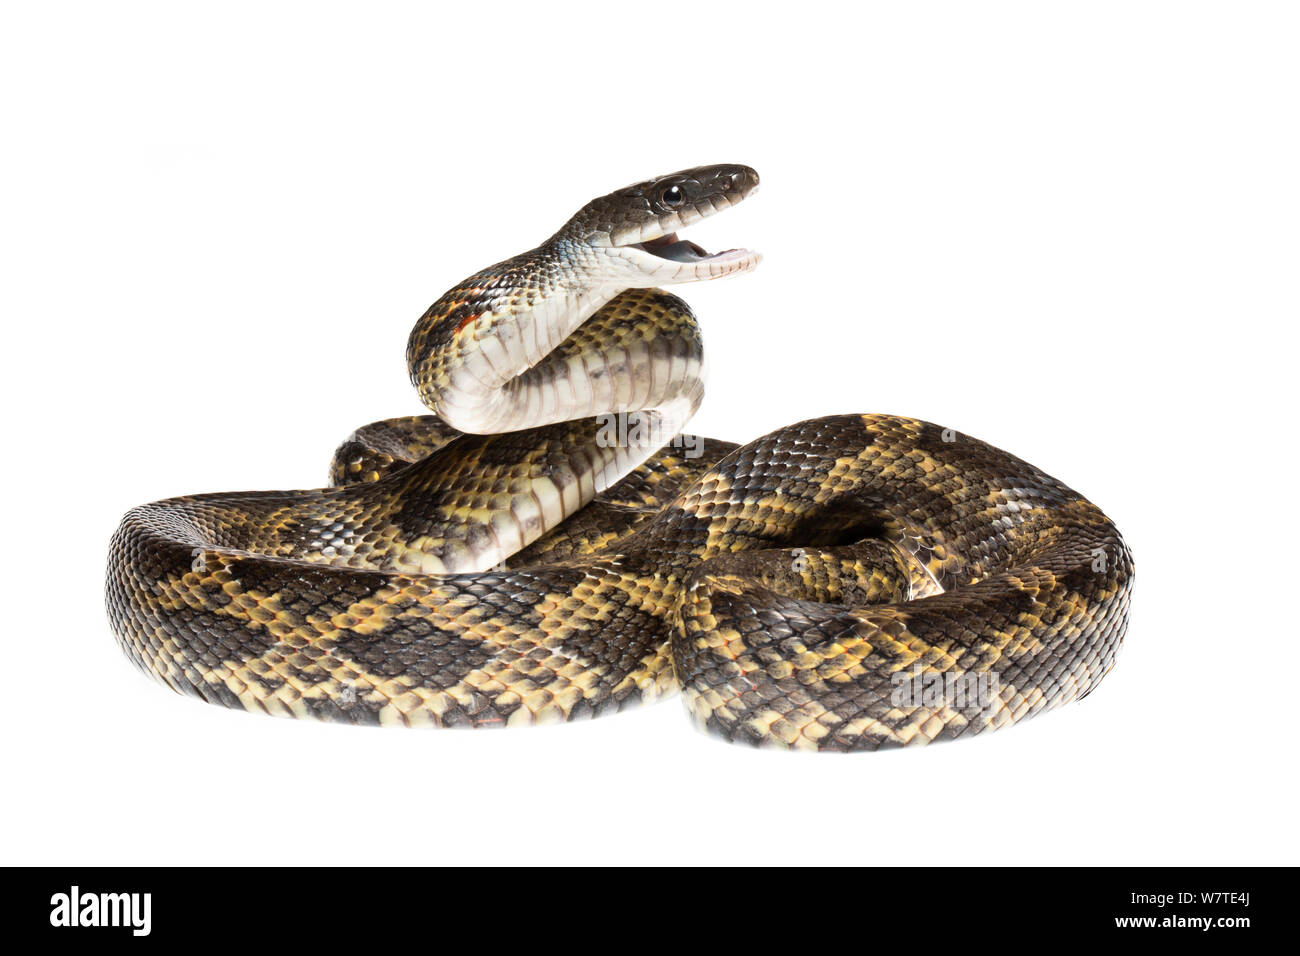 Texas Rat Snake (Elaphe obsolete lindheimeri) Texas, USA. Meetyourneighbours.net project. Stock Photo